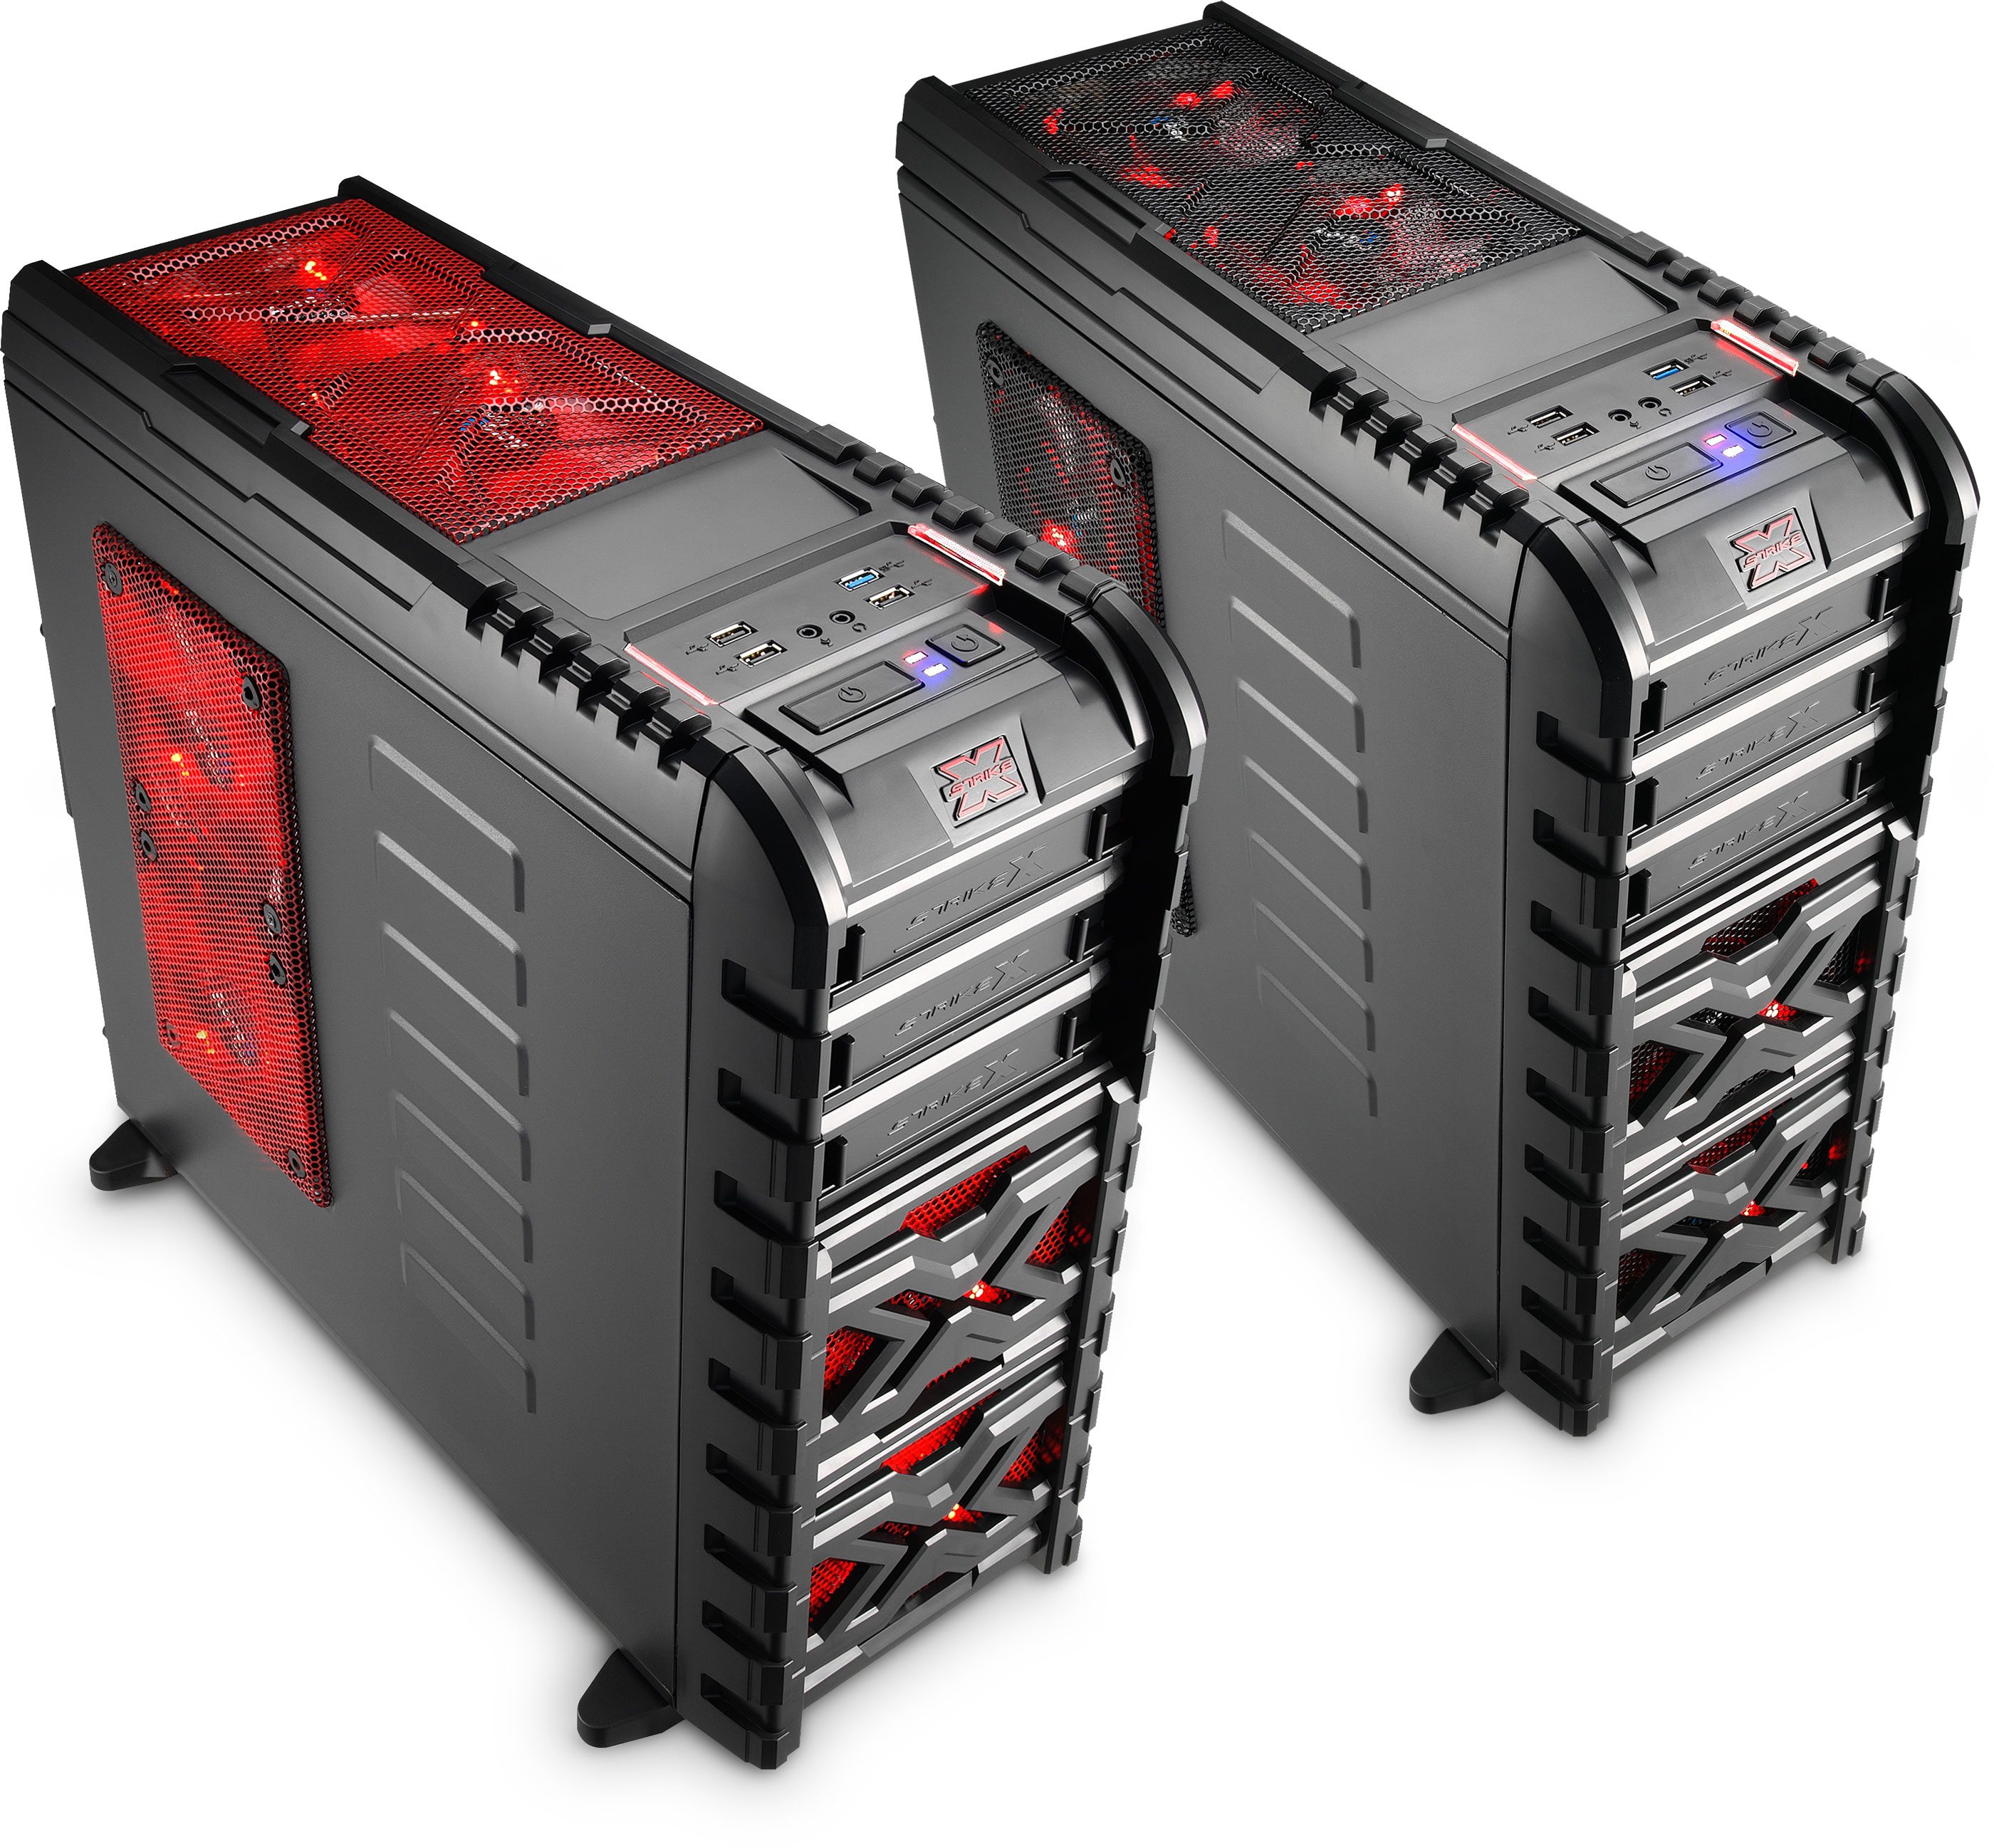 Aerocool Strike-X GT Black computer case